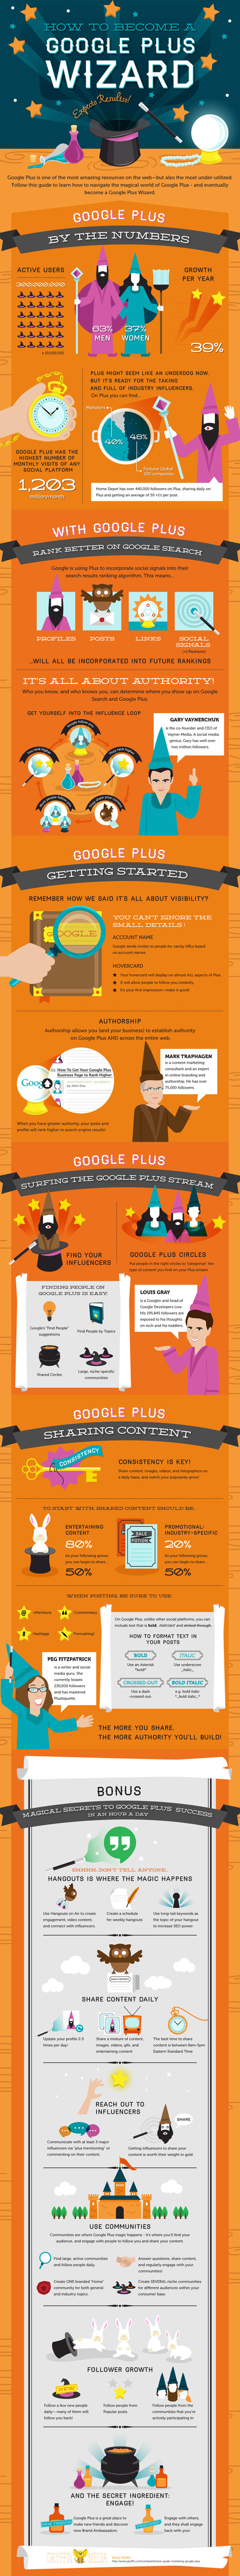 How to Use GooglePlus for Marketing - infographic - Digital Information World | #TheMarketingTechAlert | The MarTech Digest | Scoop.it